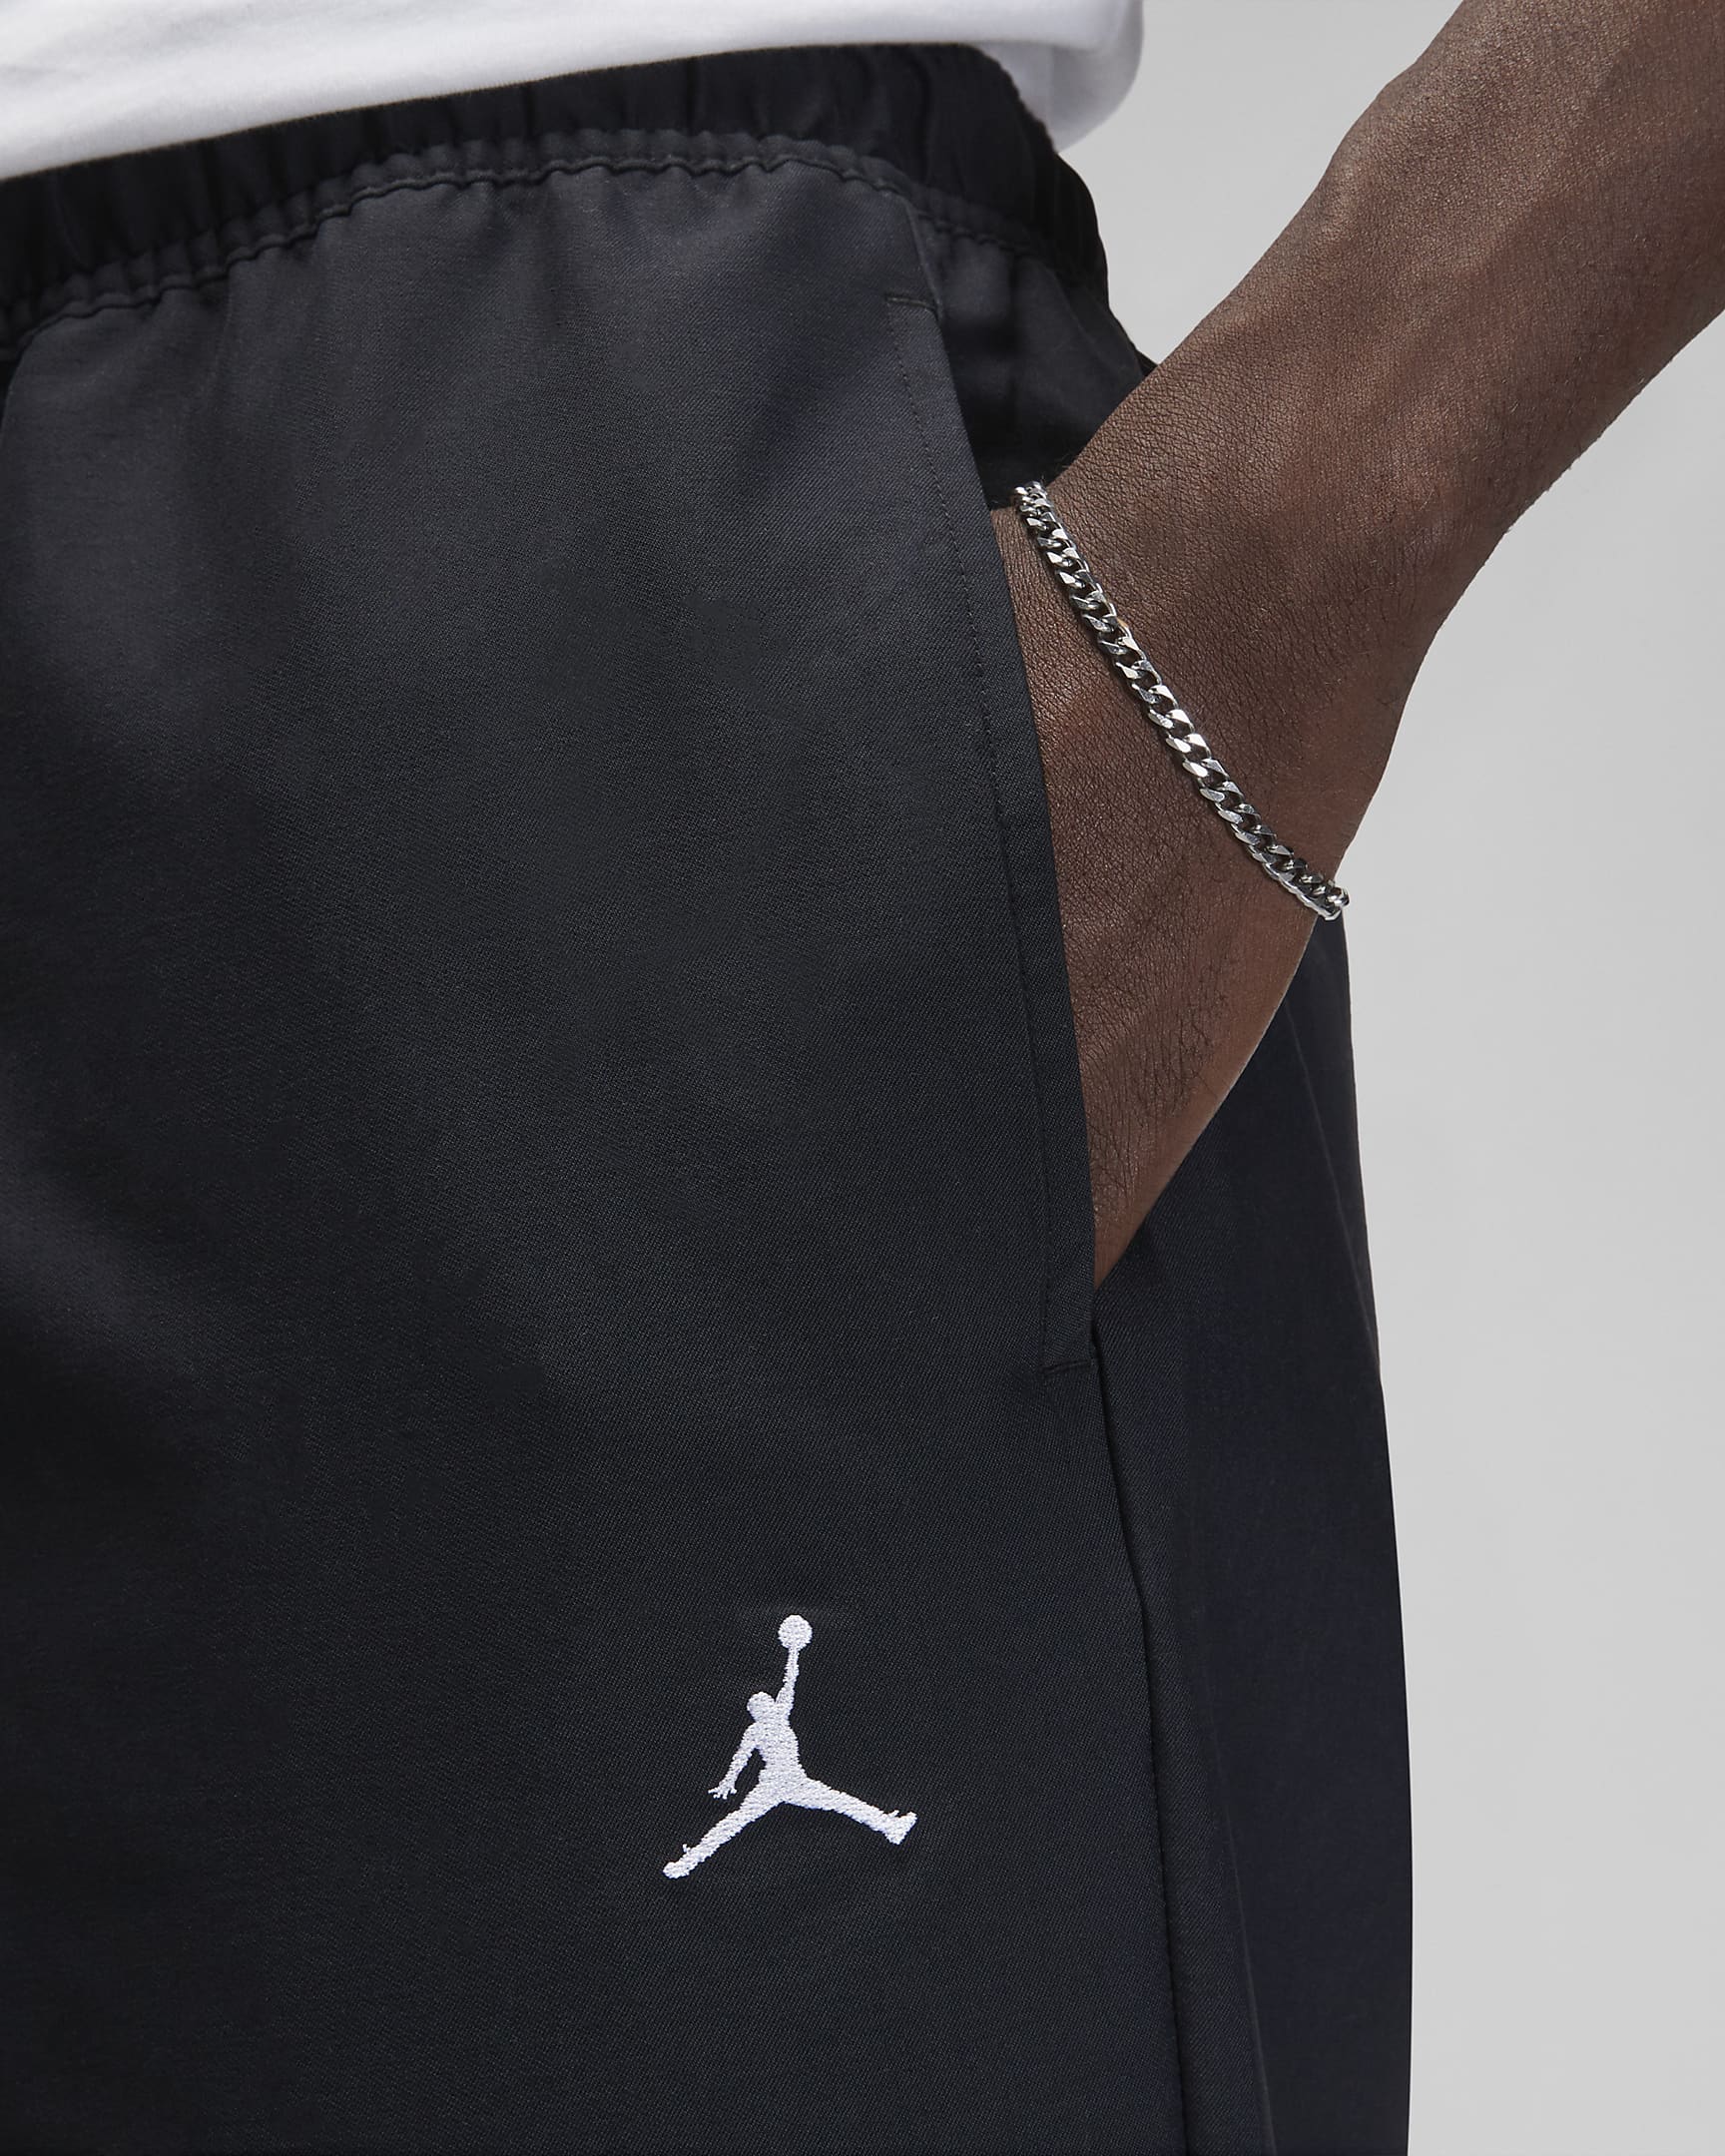 Jordan Essentials Men's Cropped Trousers. Nike PH